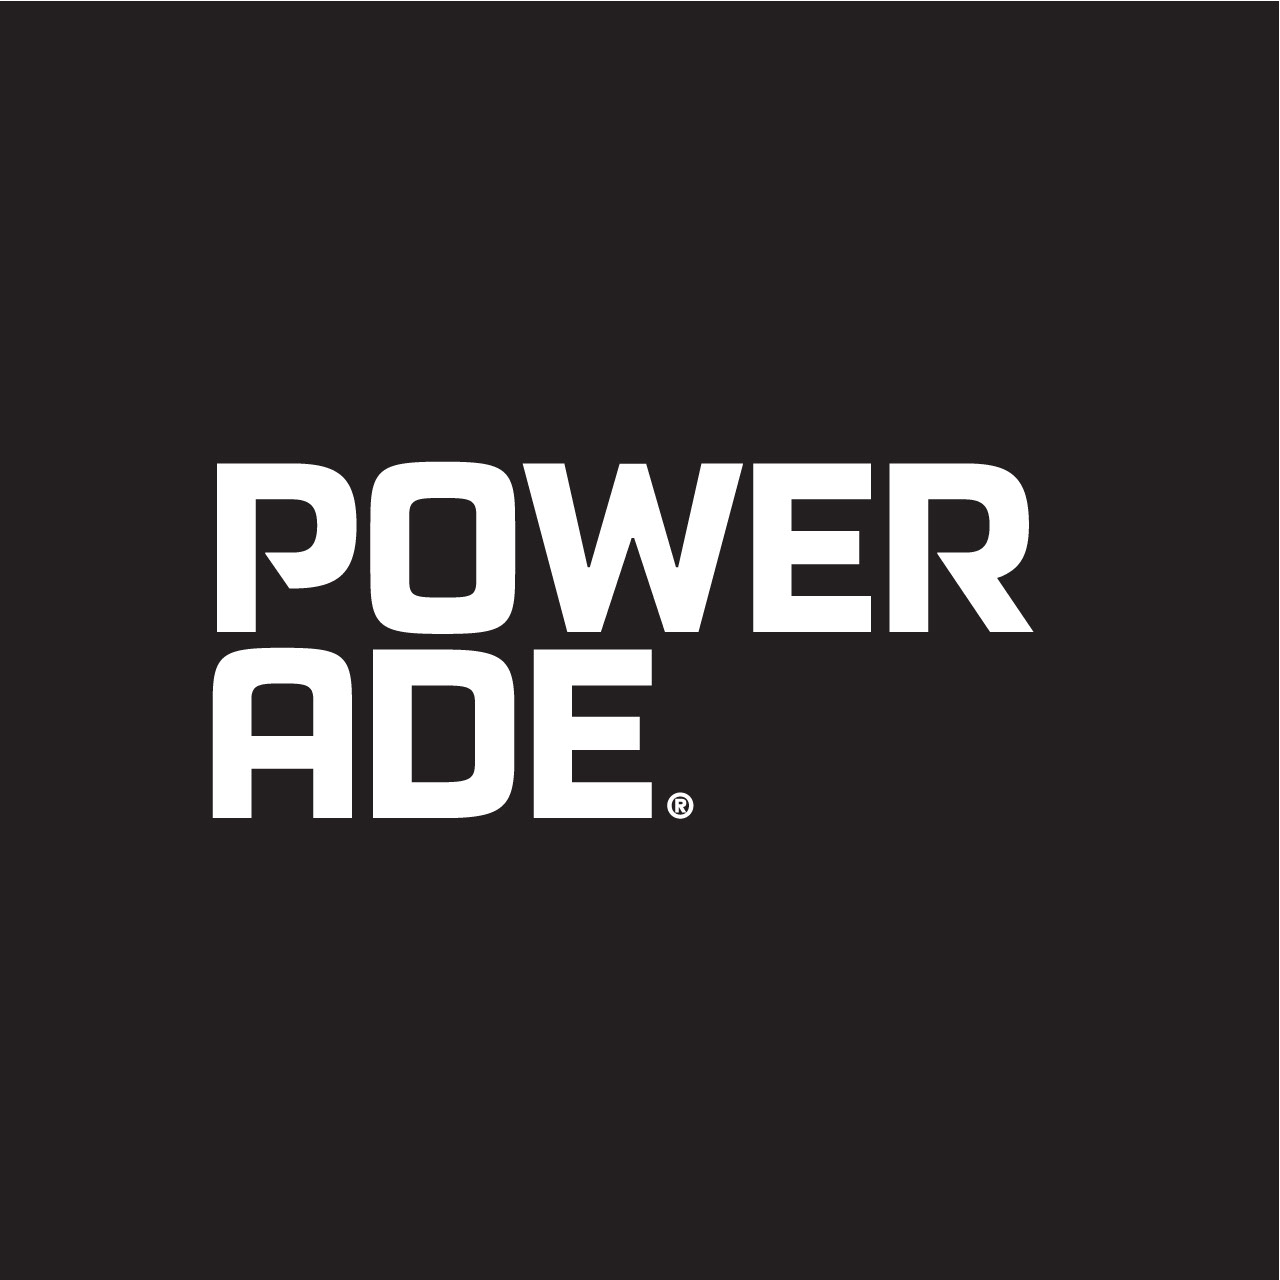 Logotip Powerade